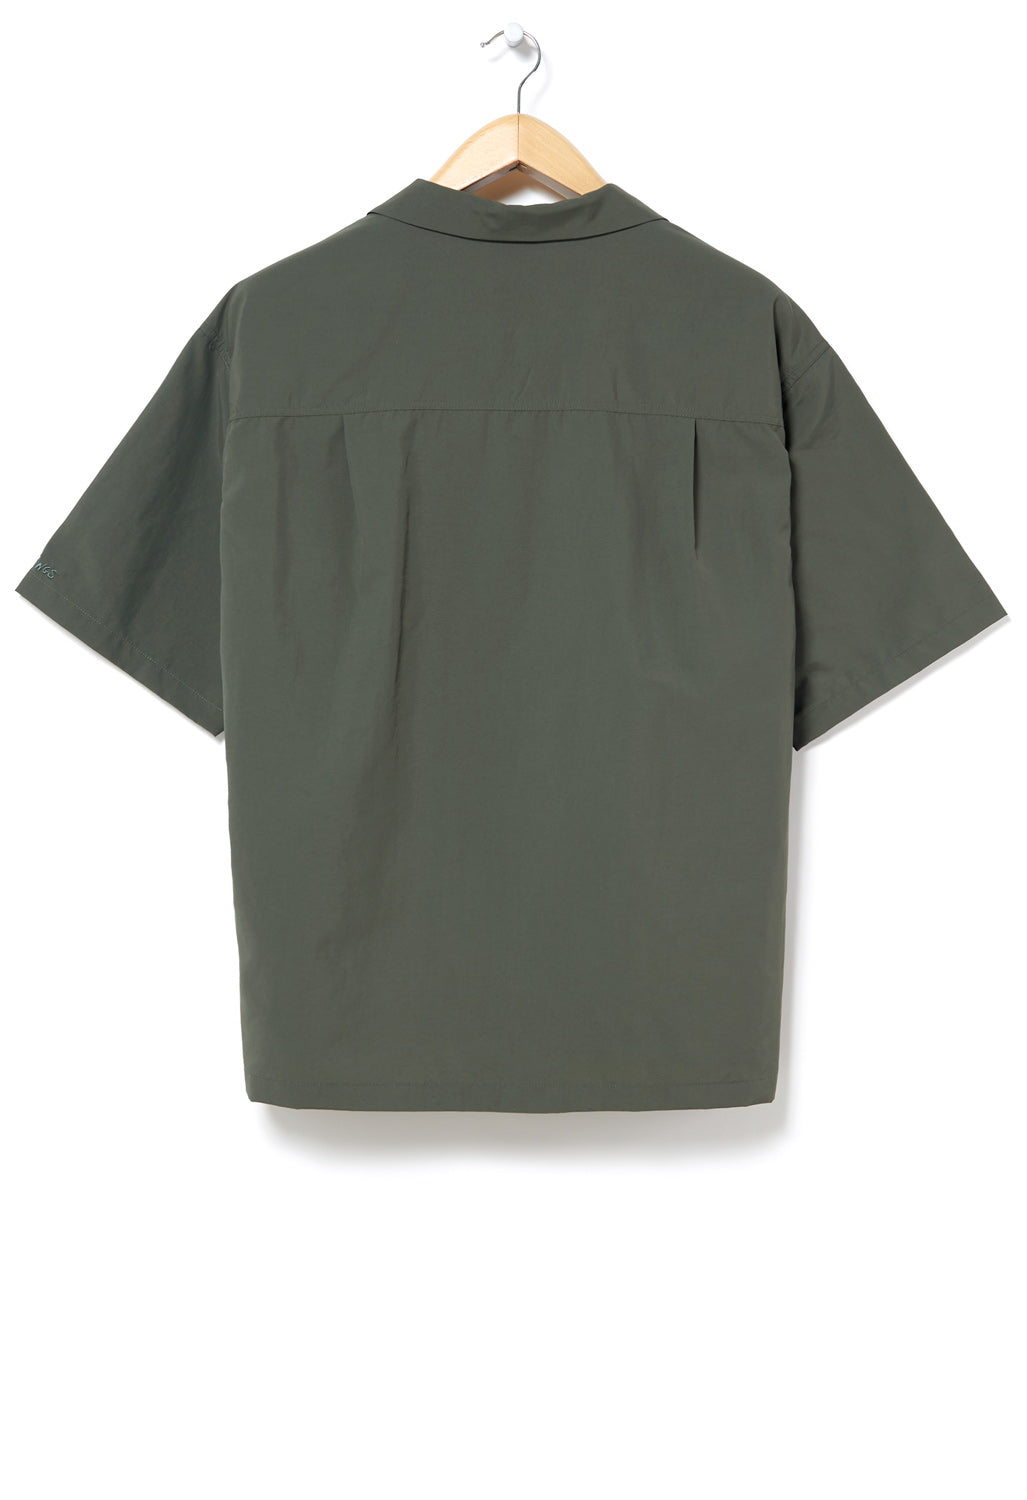 Wild Things Men's Half Sleeve Camp Shirt - Olive